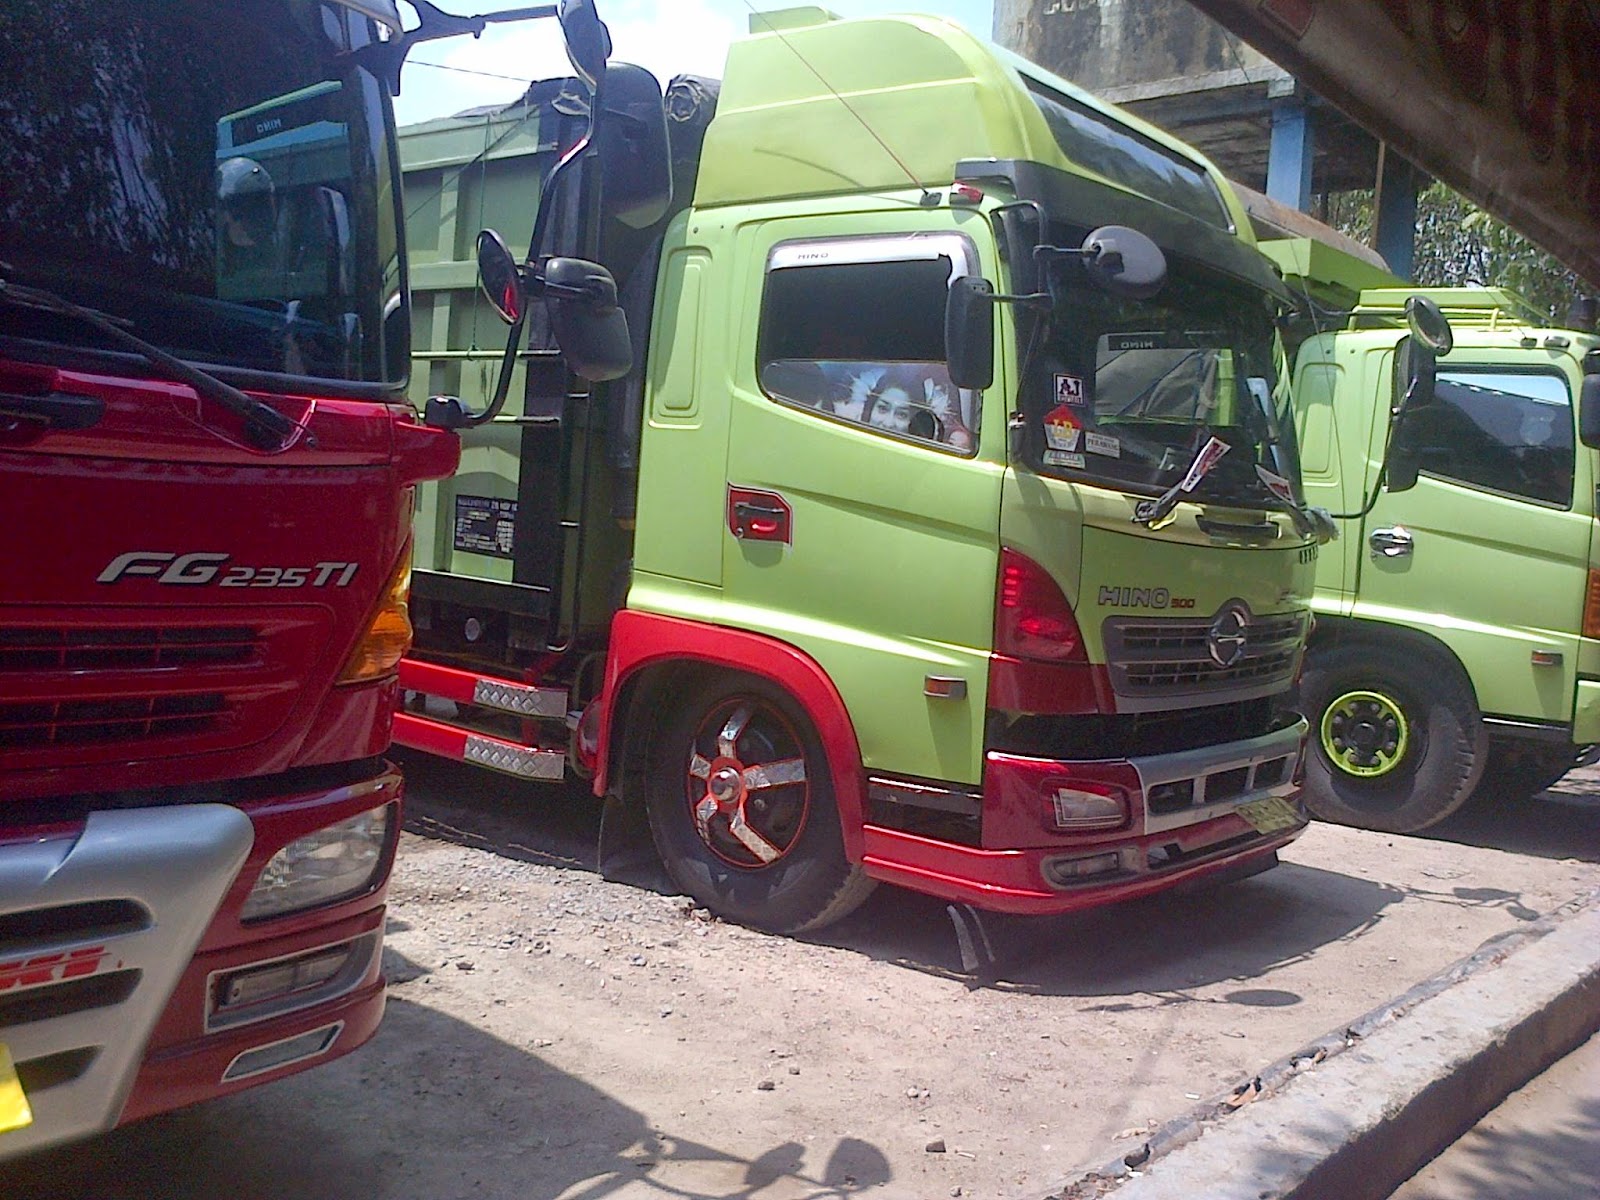 HINO Lohan Variasi Truck Rbe